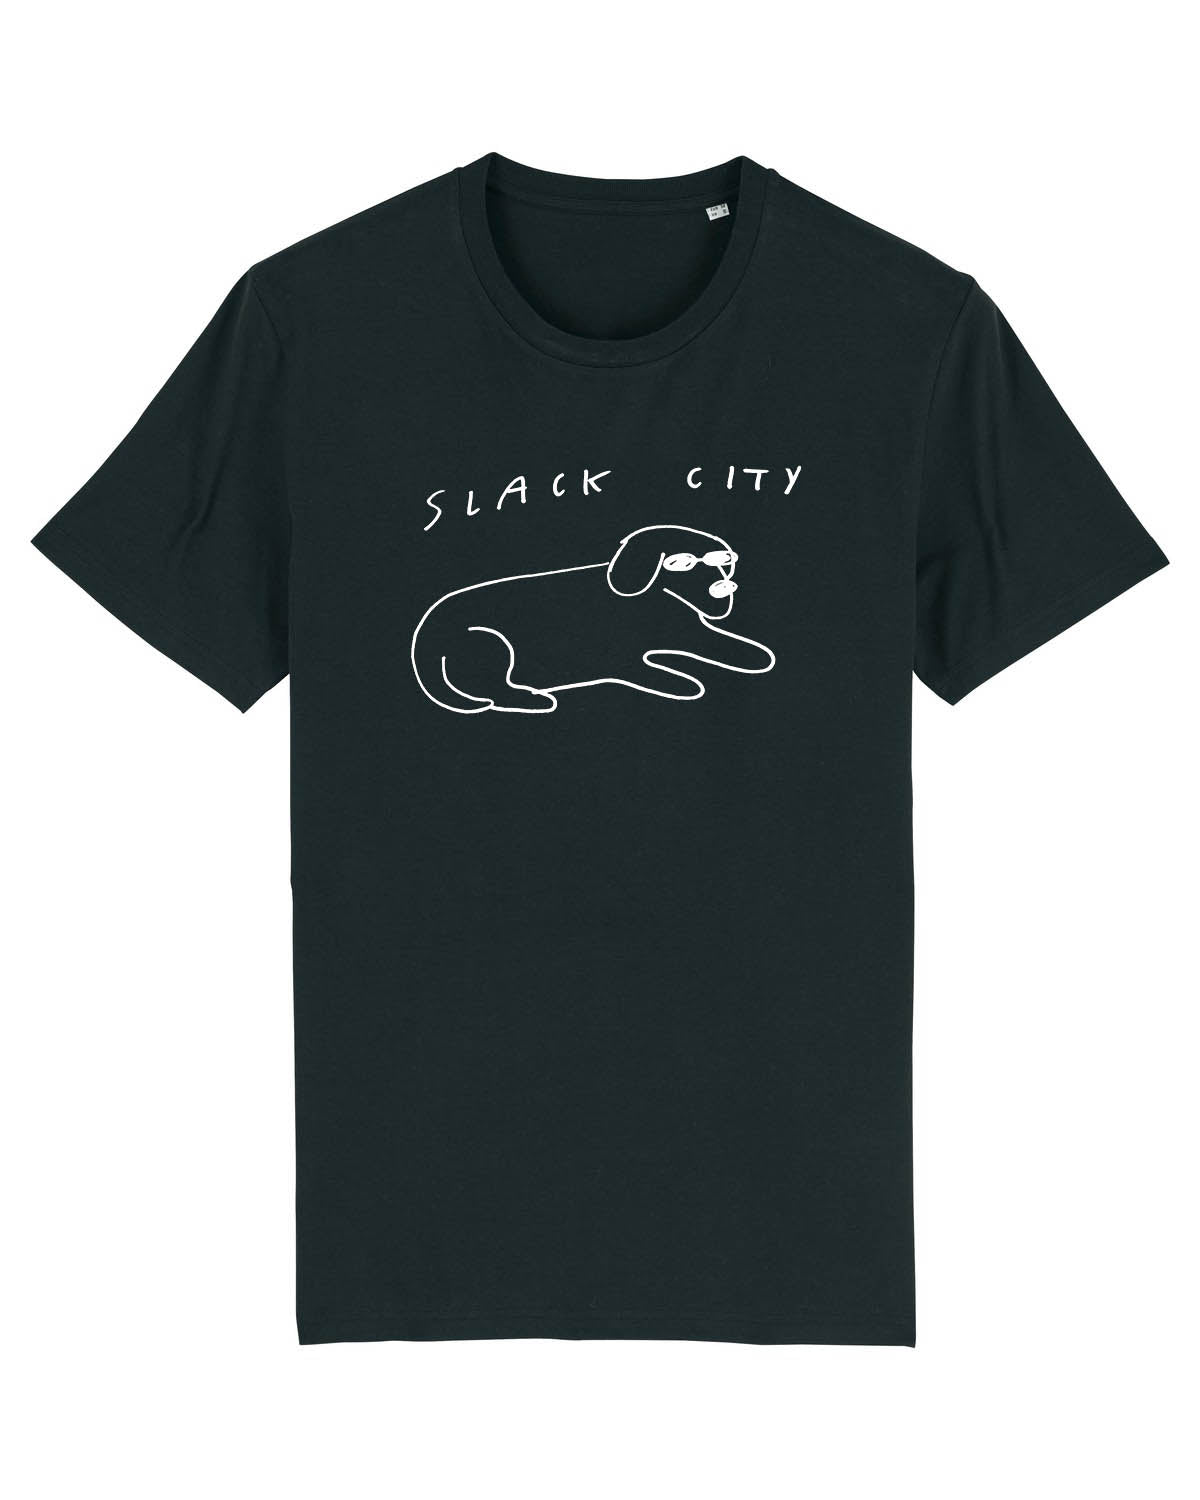 Slack City Cool Dog Black Tee by Slack City Radio